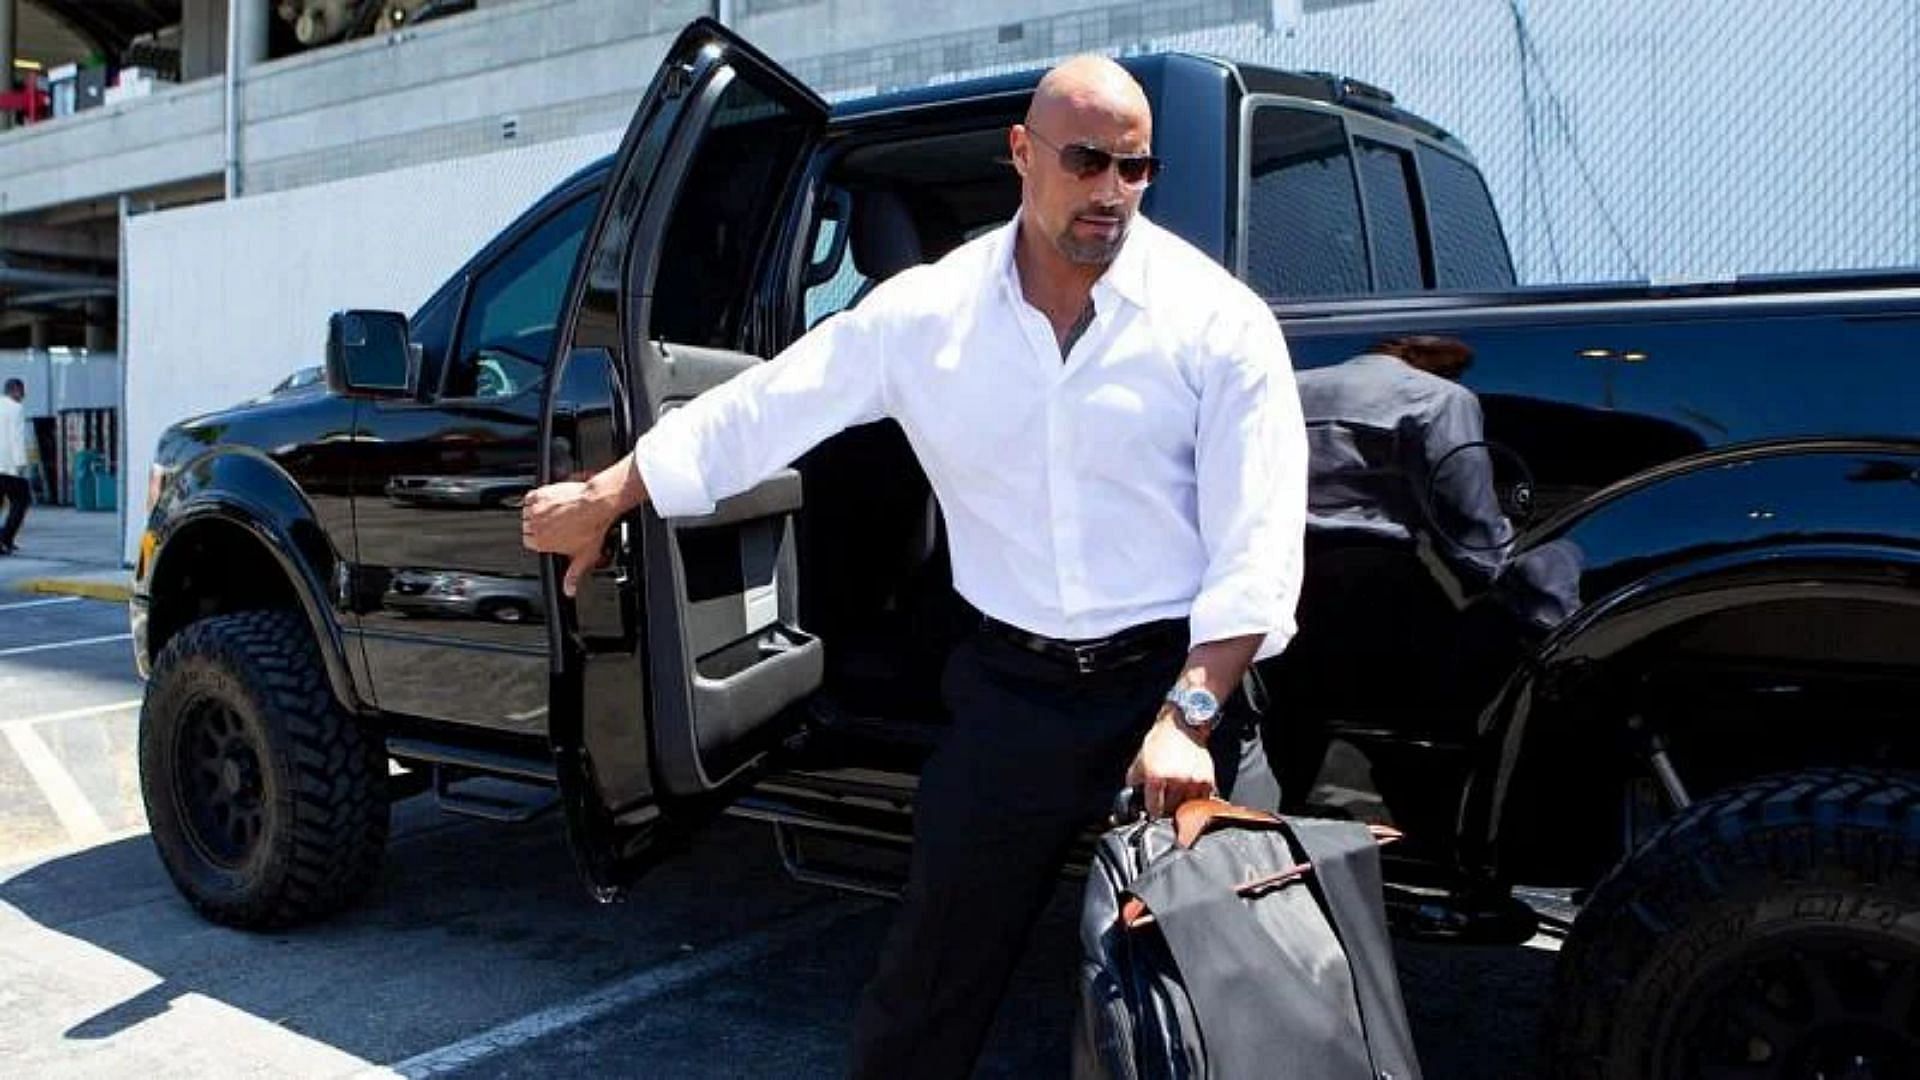 WWE legend The Rock, real name Dwayne Johnson